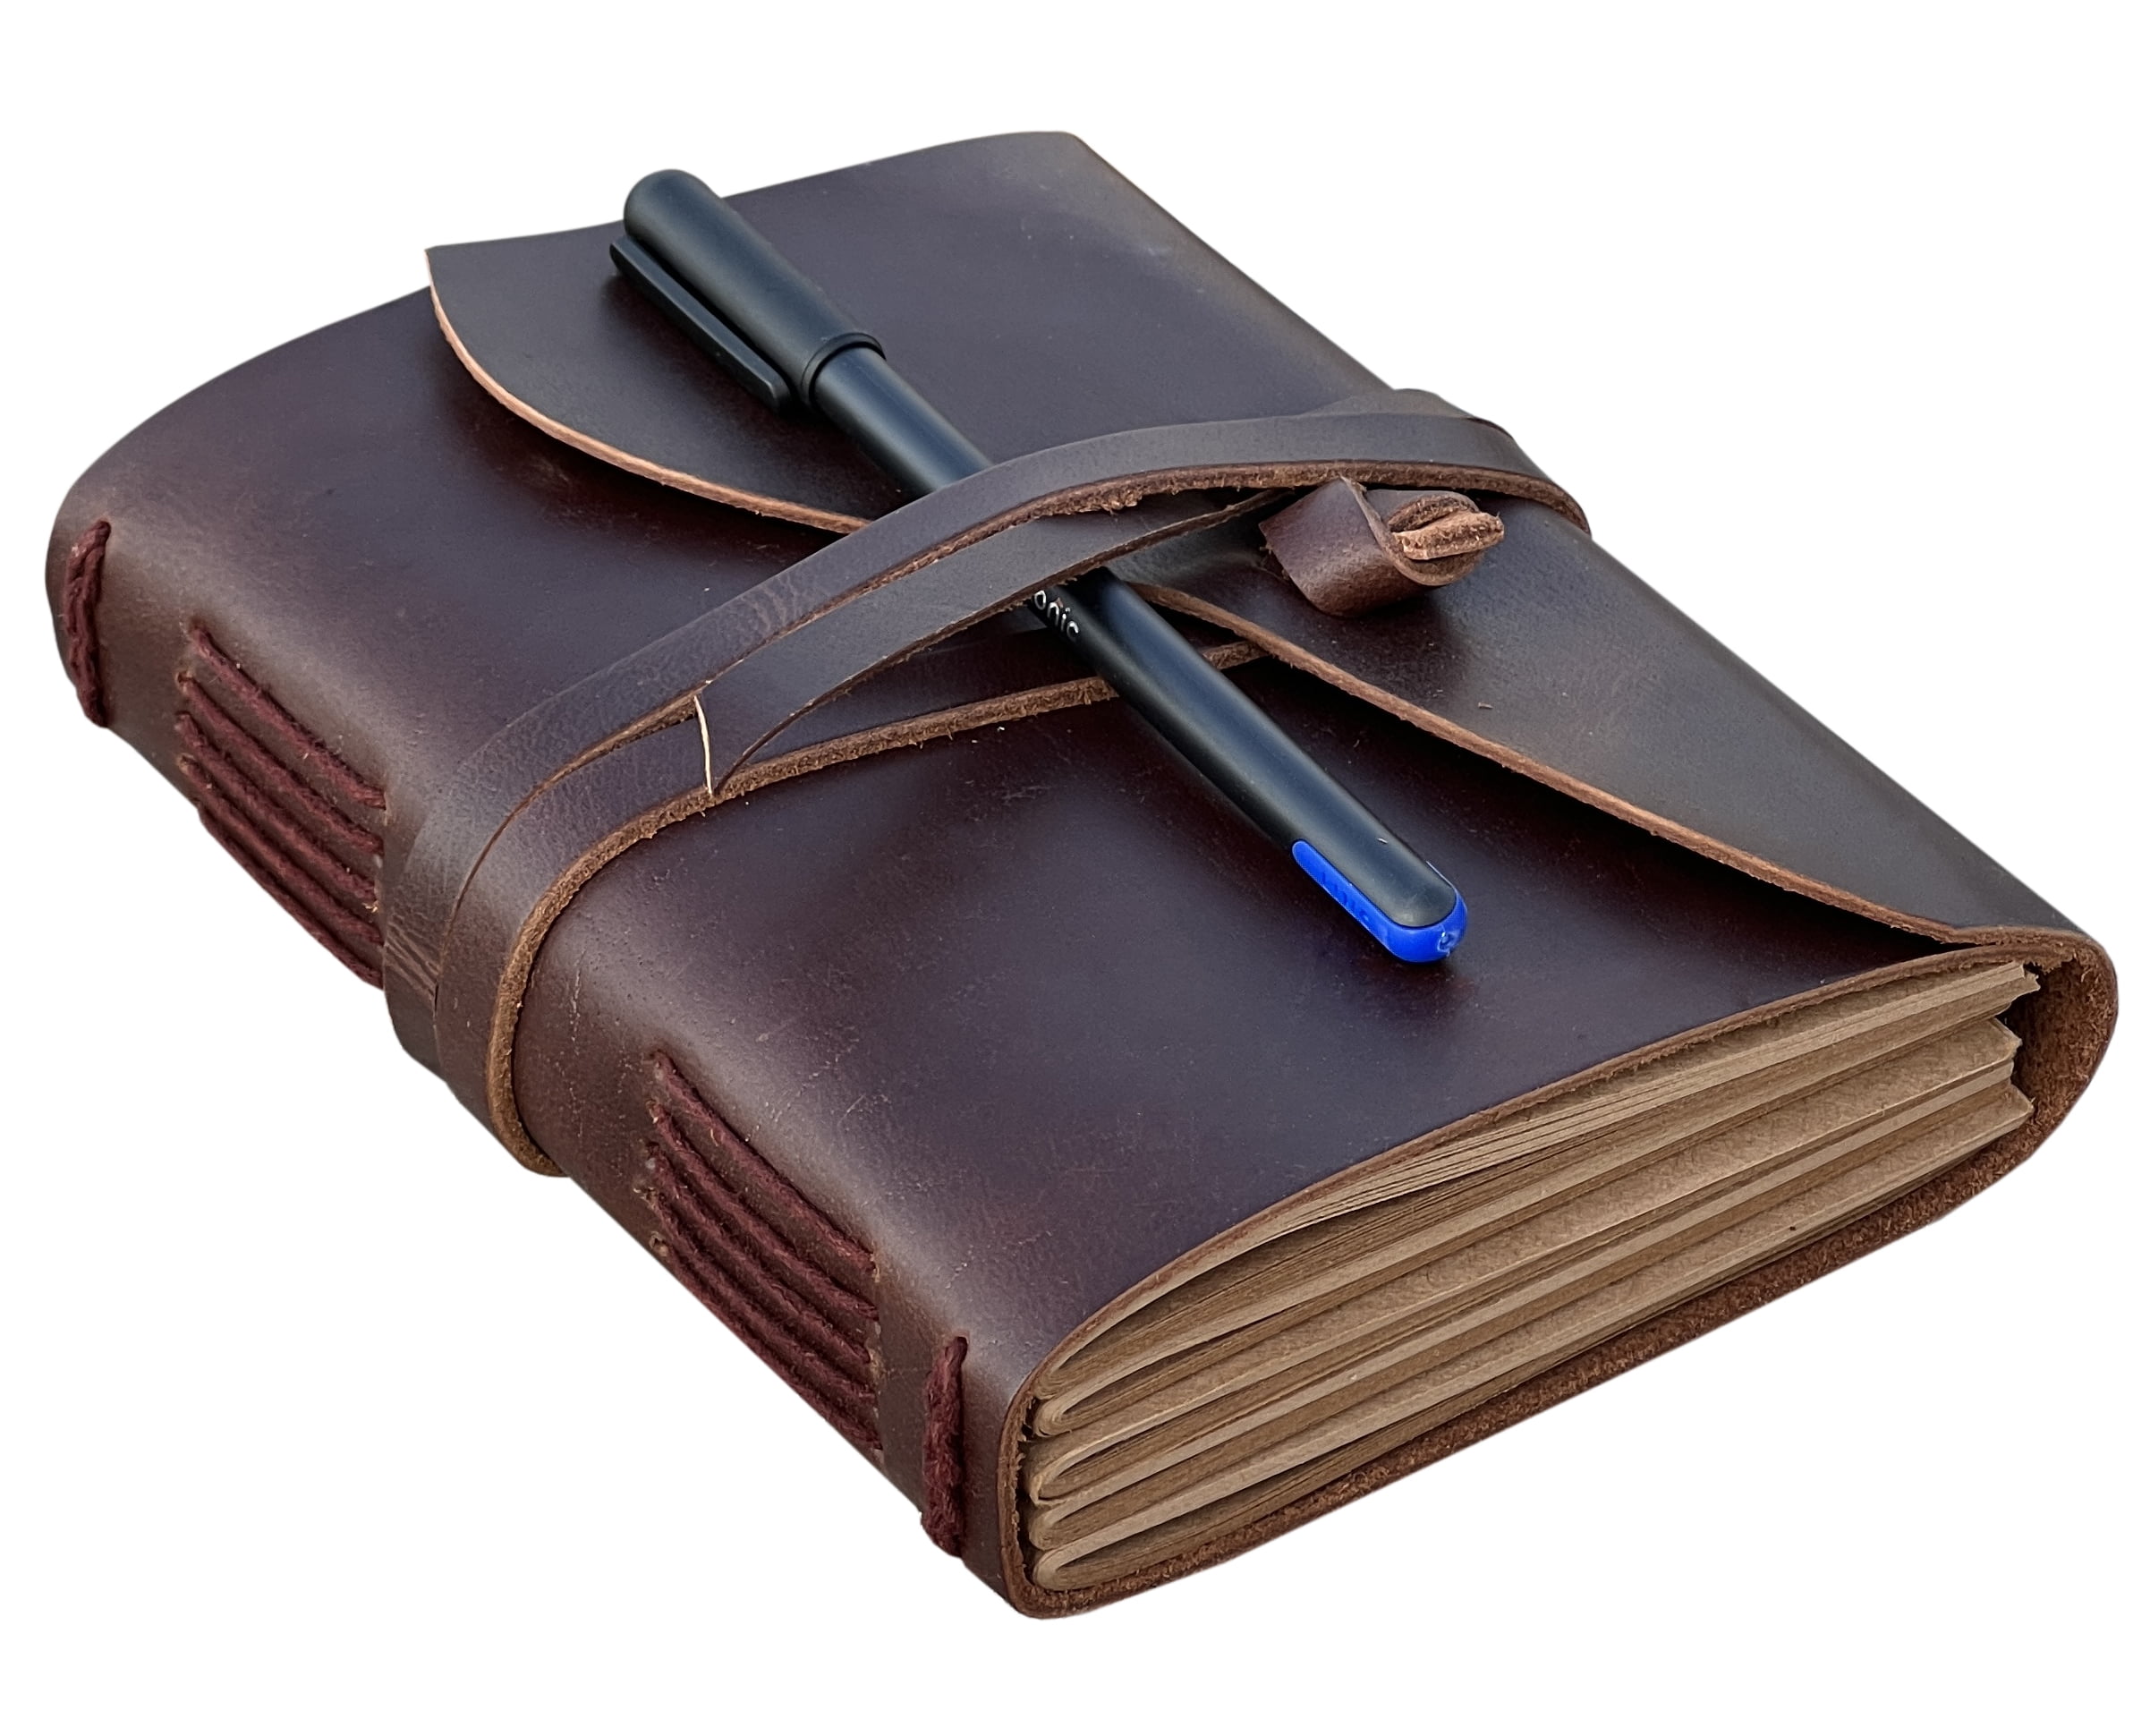 Bible Journaling for Beginners – Faber-Castell USA